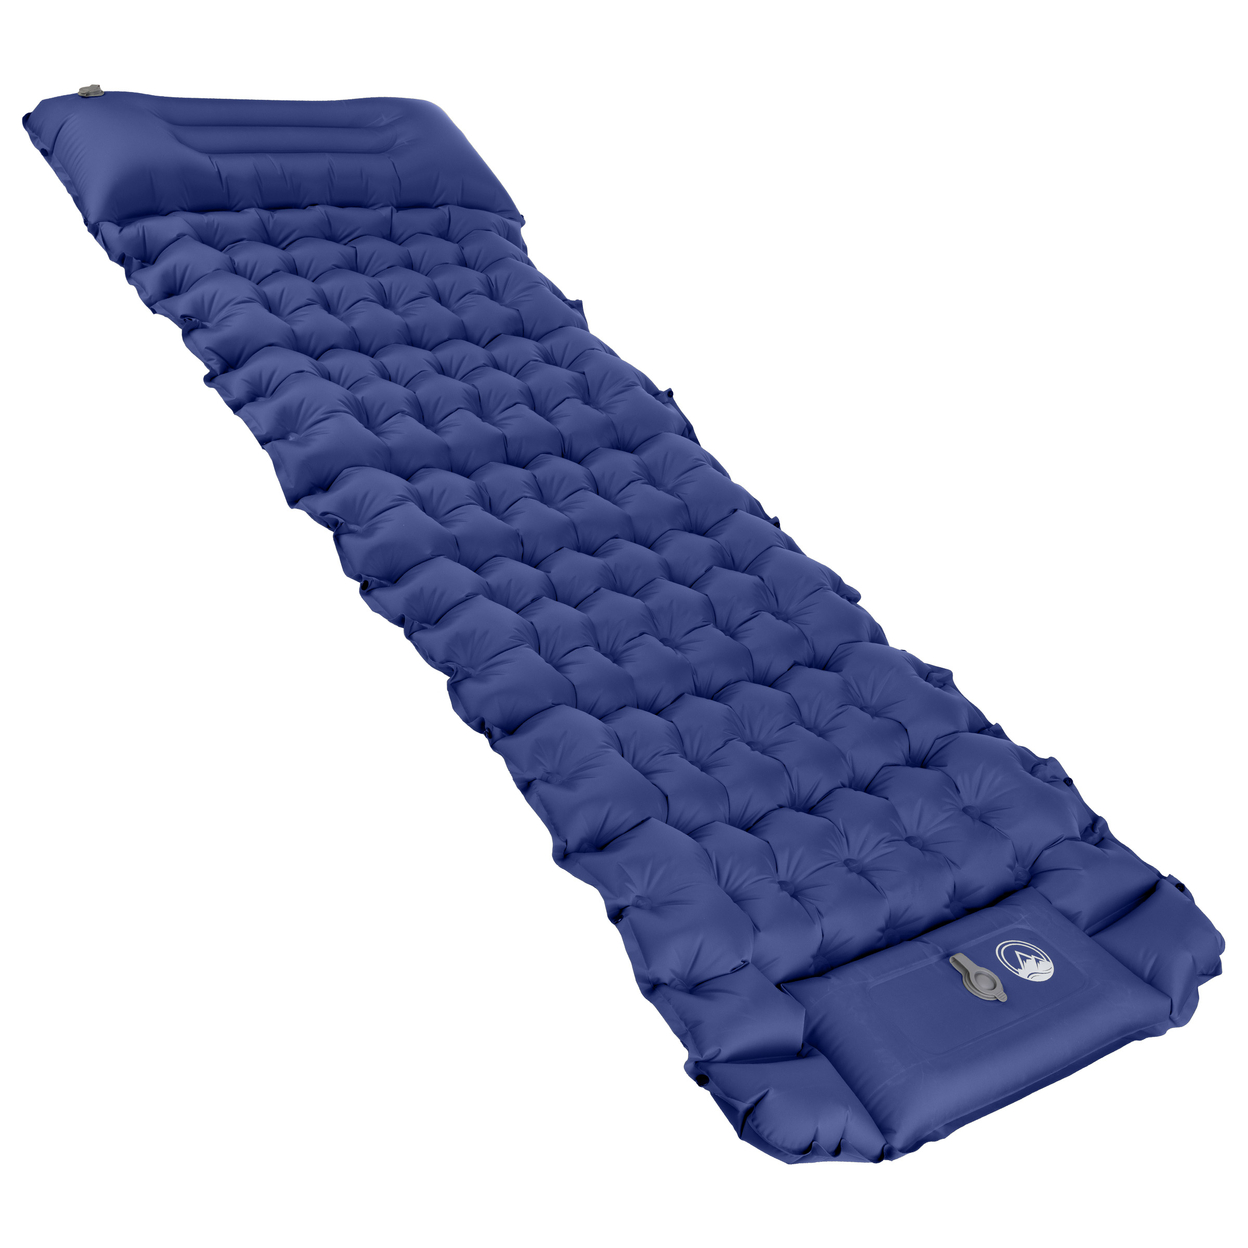 Inflatable Sleeping Pad Built-in Foot Pump Waterproof Mattress 77 X 27 Inch - Blue